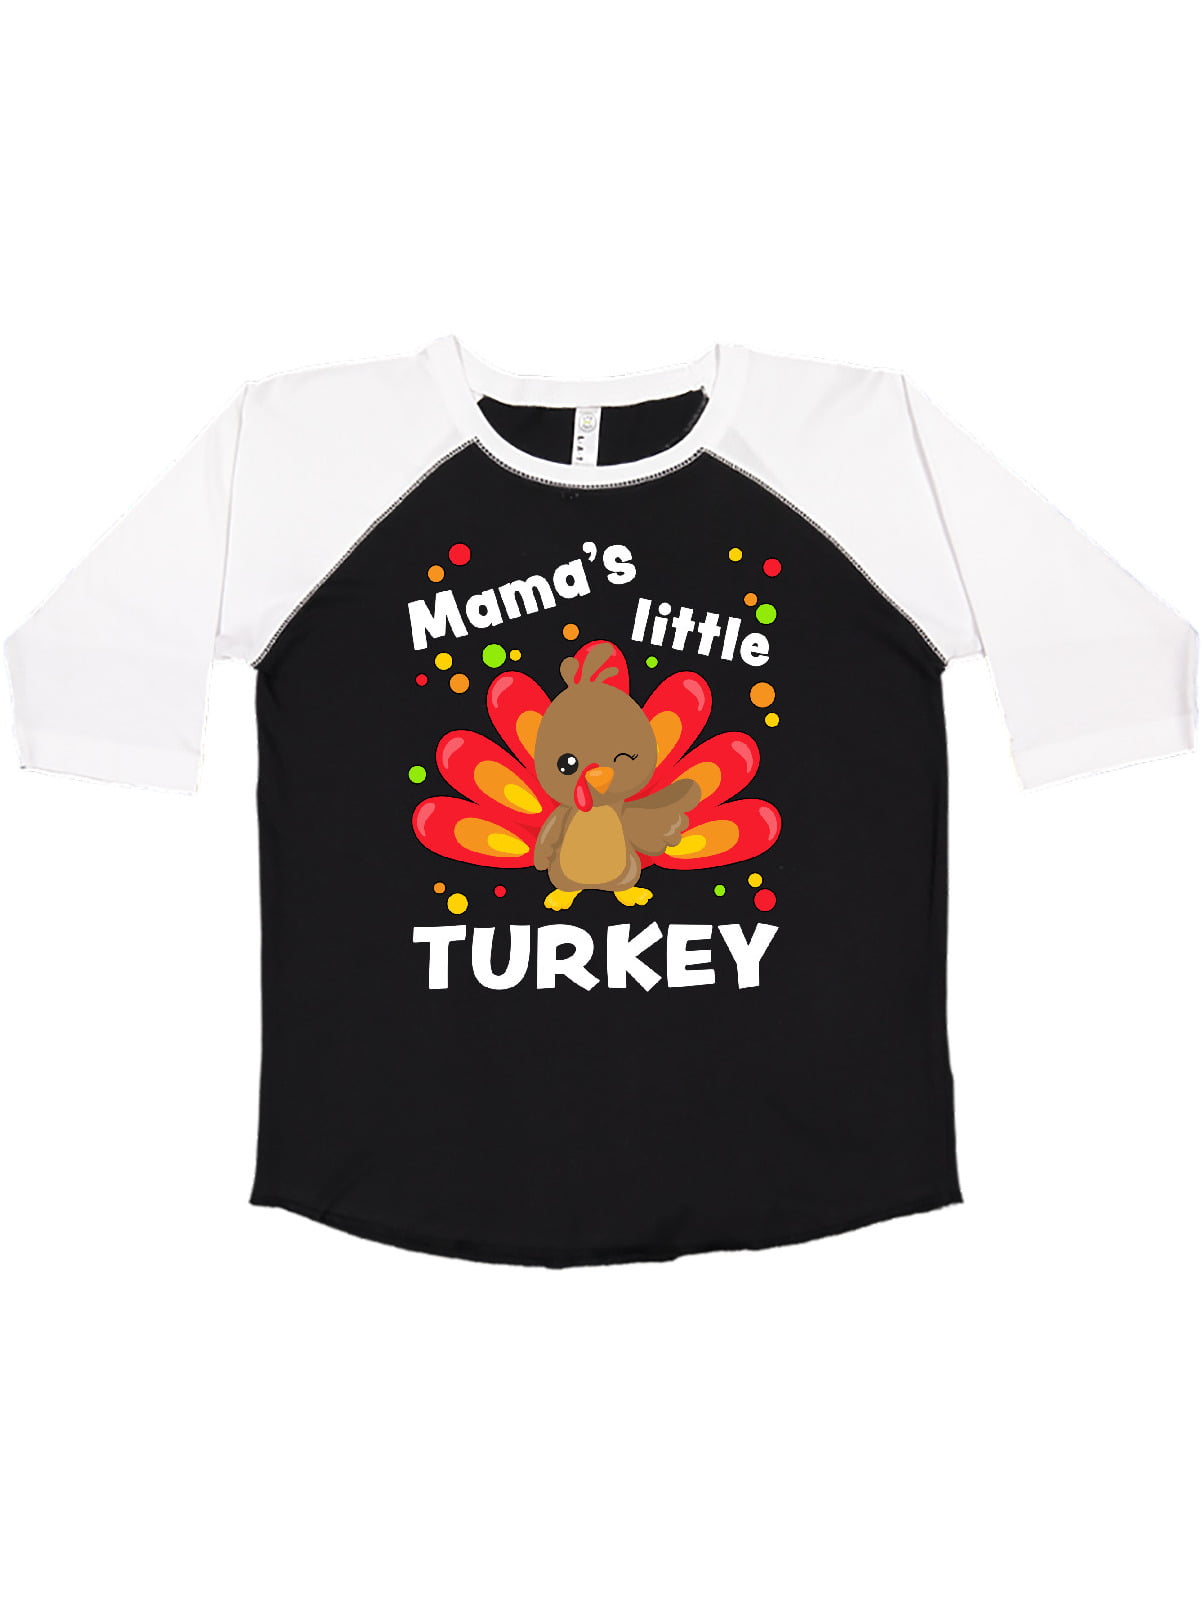 Little Turkey Kids Short Sleeve Tee Shirt